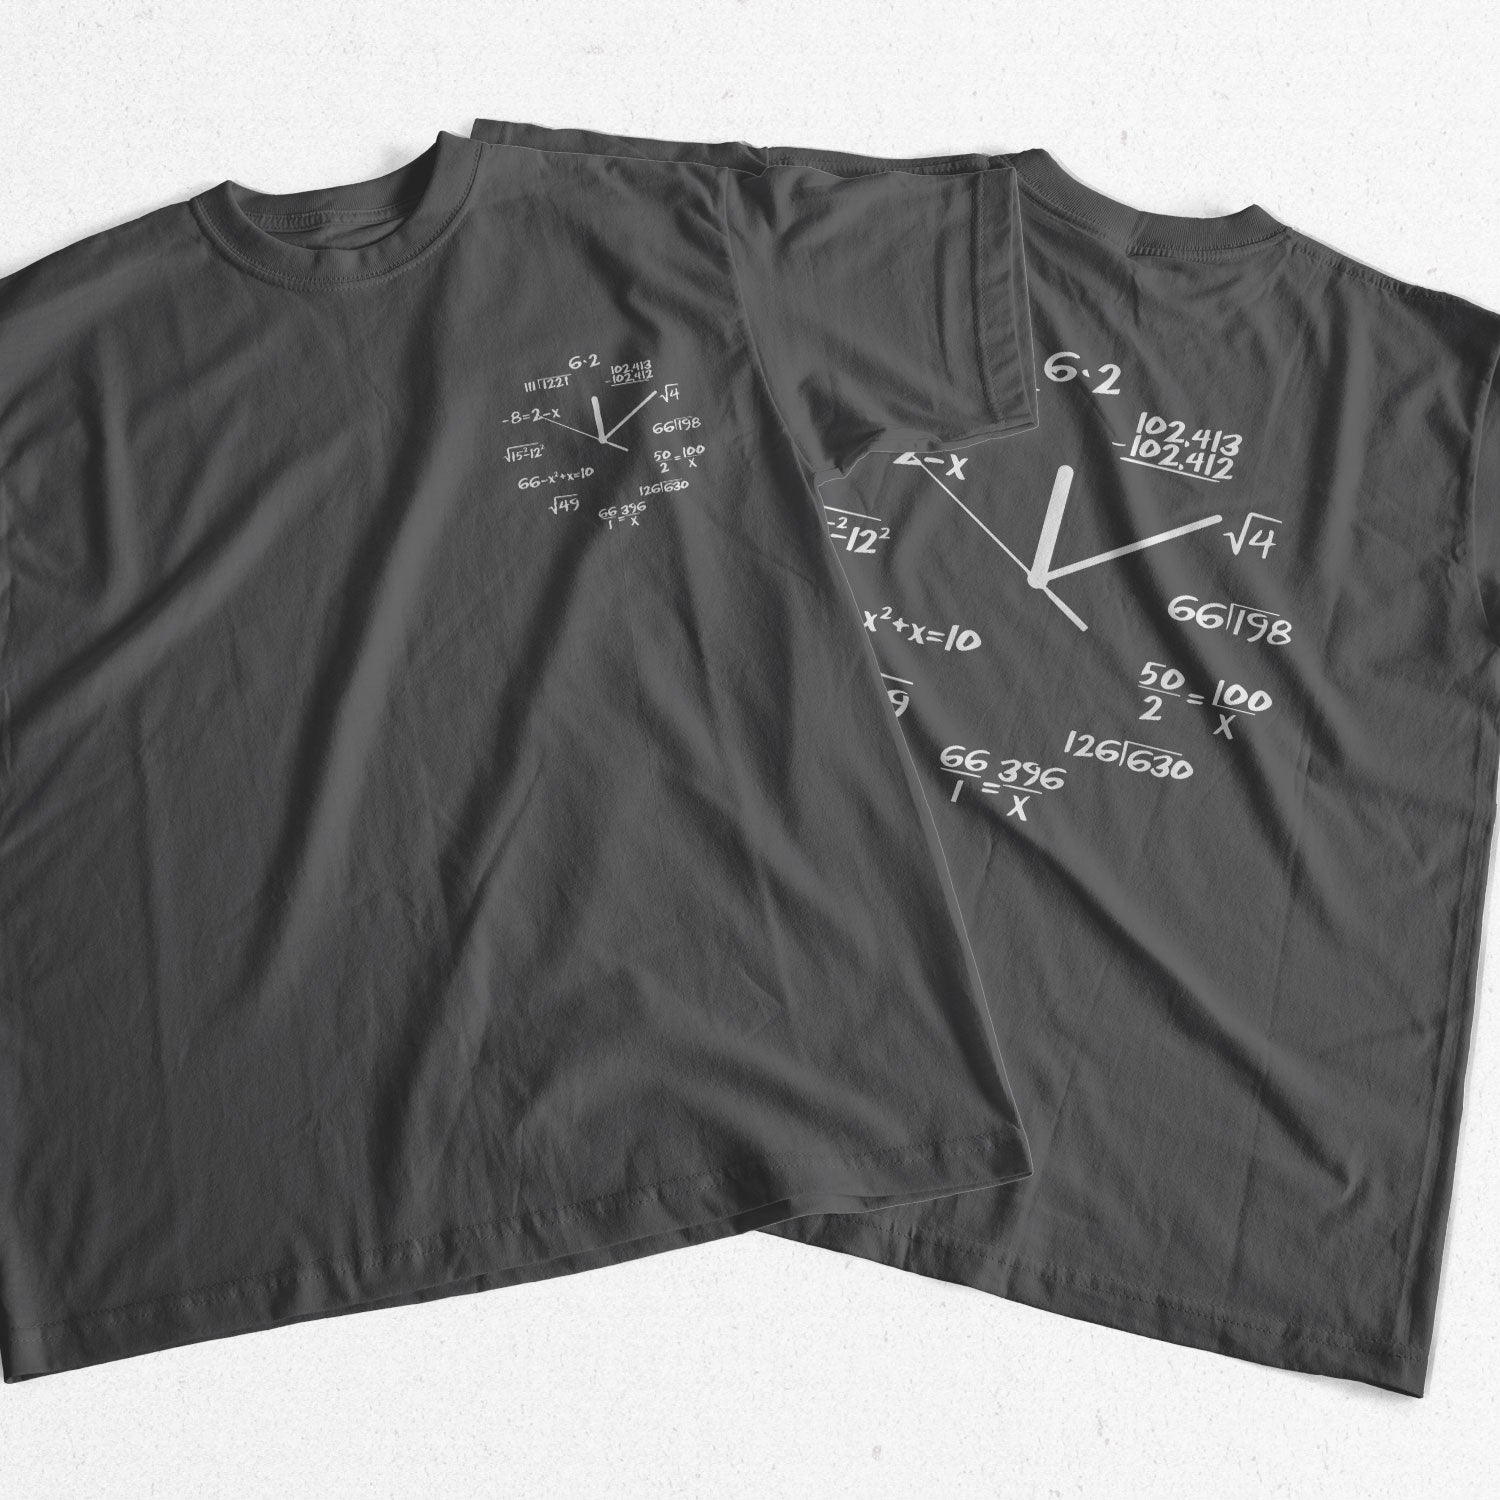 Coolmind 100% Cotton Math Clock Print Funny Men T Shirt Casual Short Sleeve O-Neck Men Tshirt Cool Summer T-Shirt Mens Tee Shirt